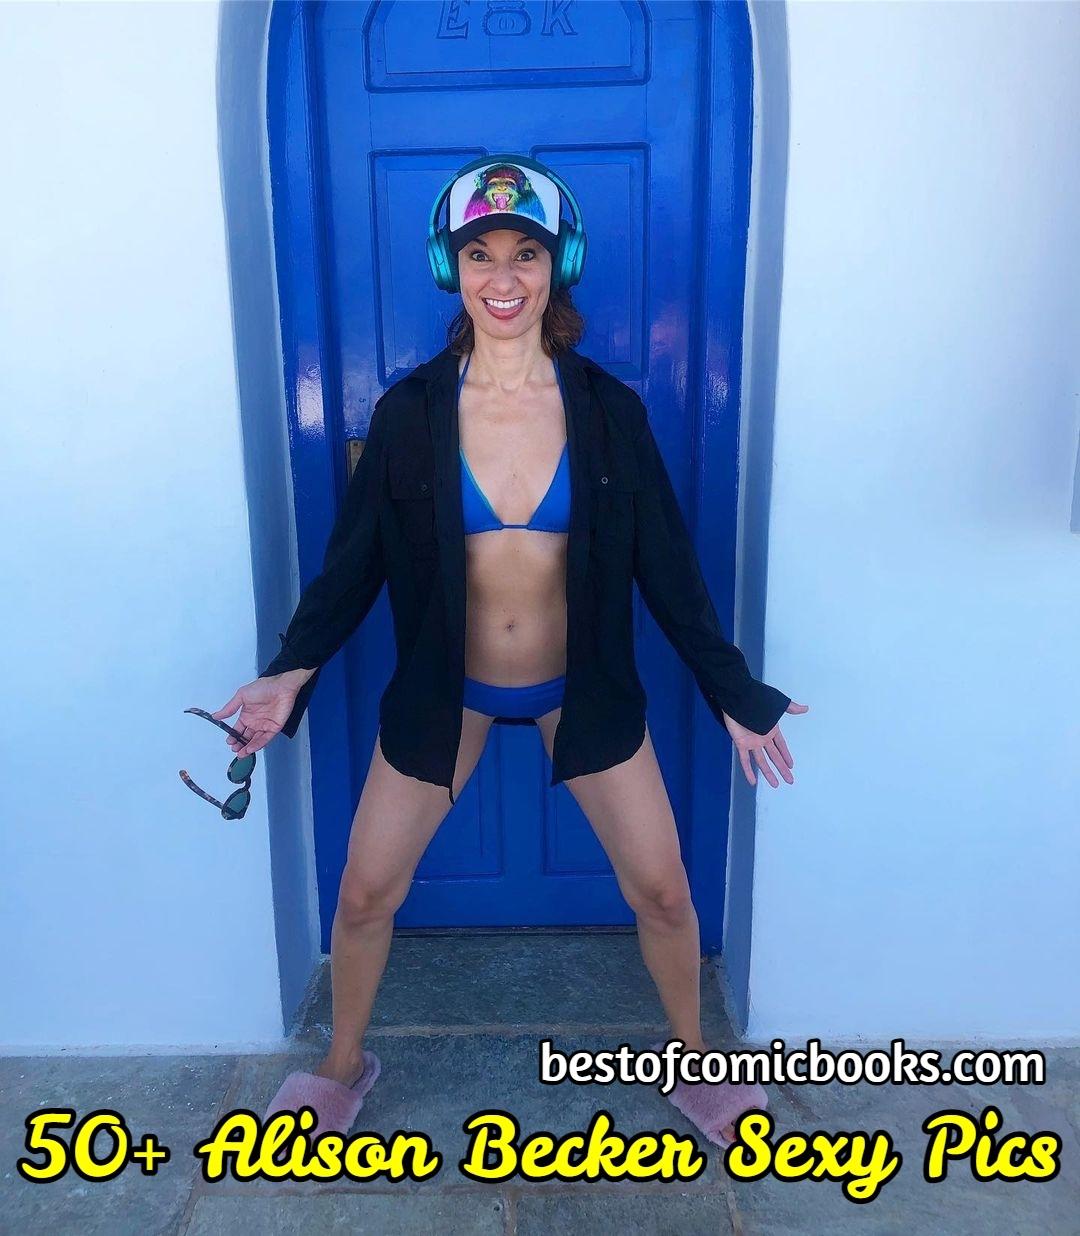 Midget Calender Alison Becker Sexy Pics